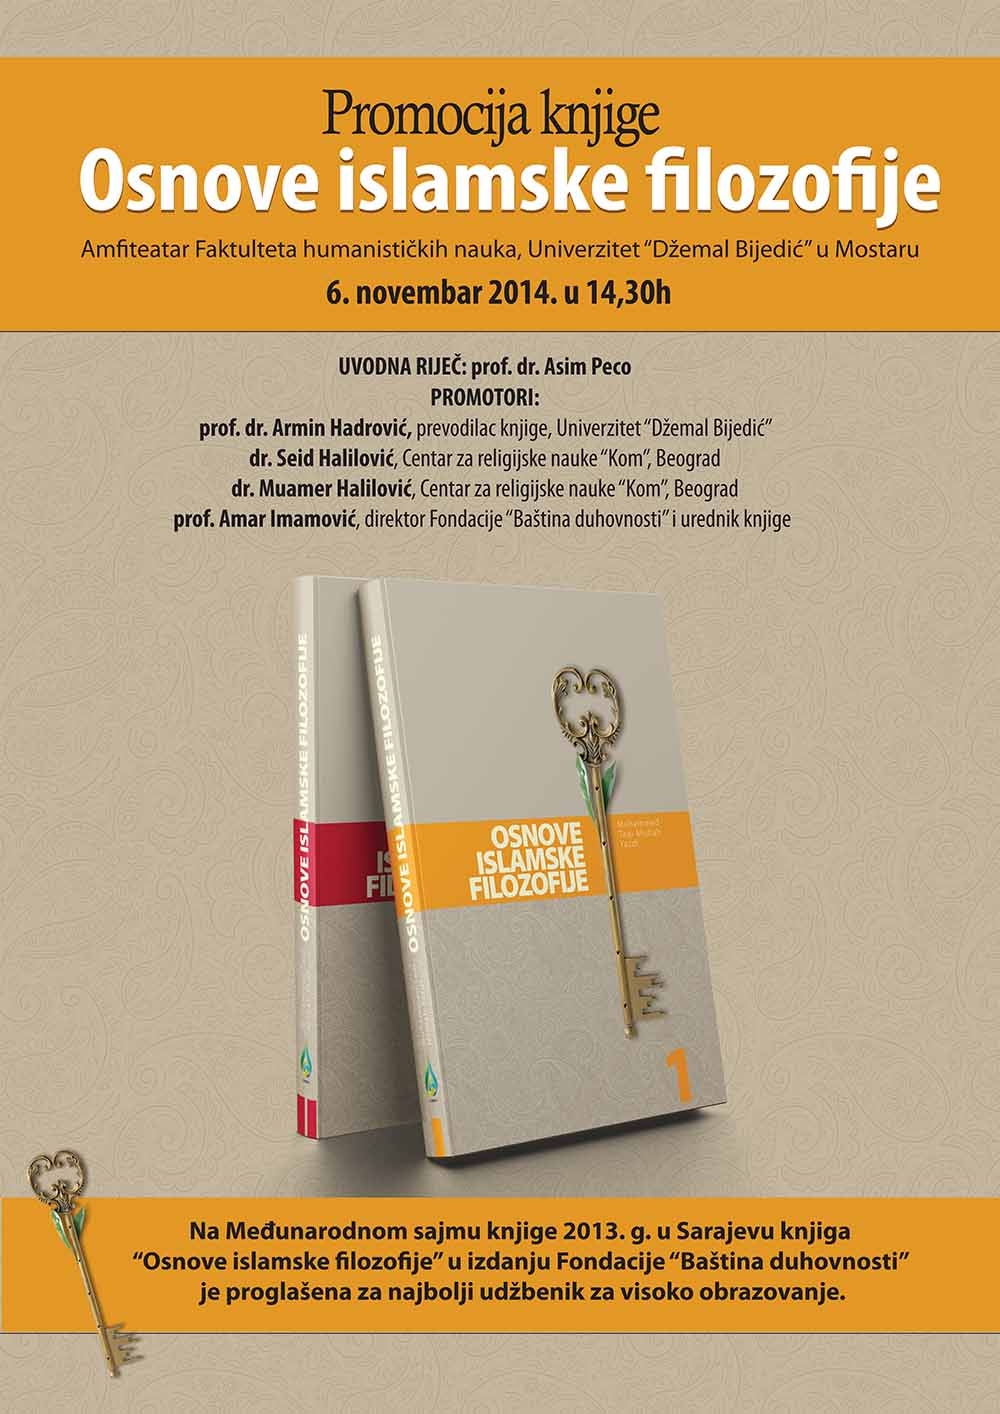 Promocija knjige “Osnove islamske filozofije”, Mostar